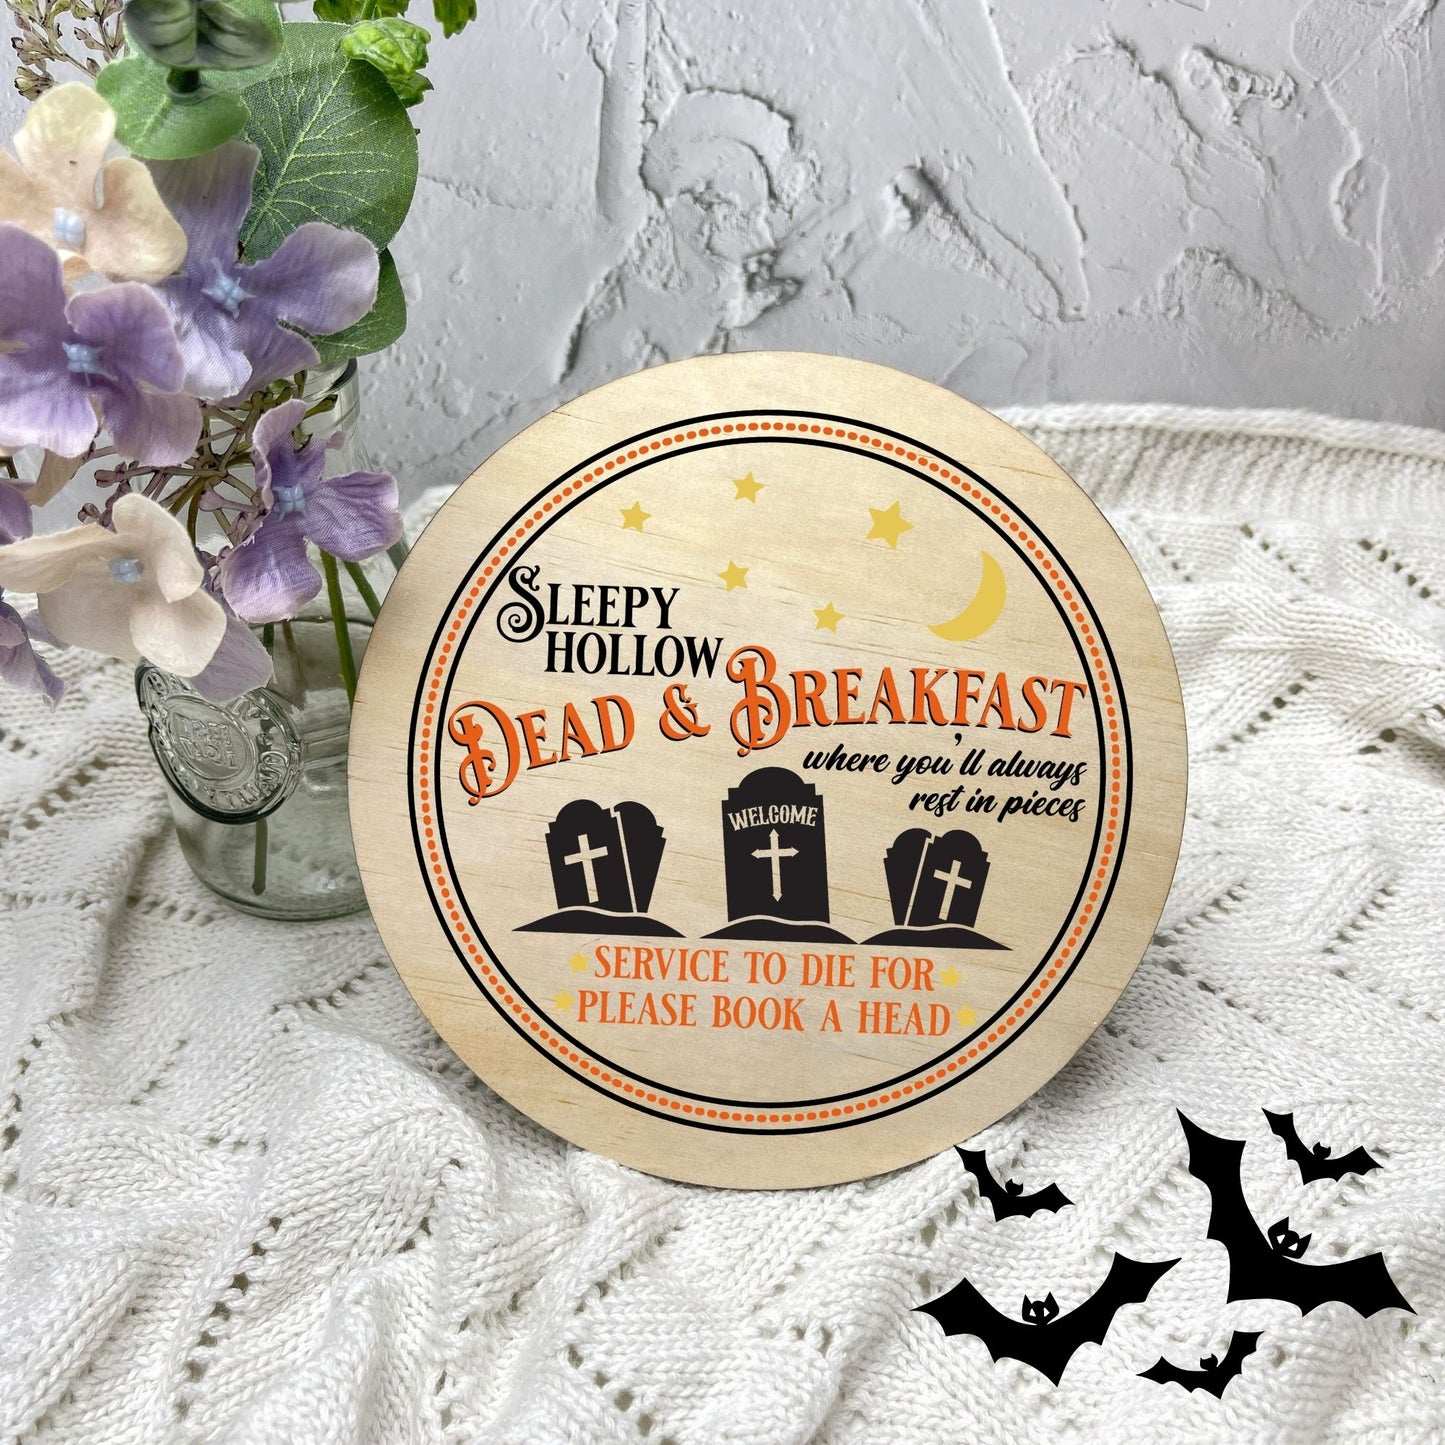 Sleepy Hollow Dead and Breakfast sign, Halloween Decor, Spooky Vibes, hocus pocus sign, trick or treat decor, haunted house h30